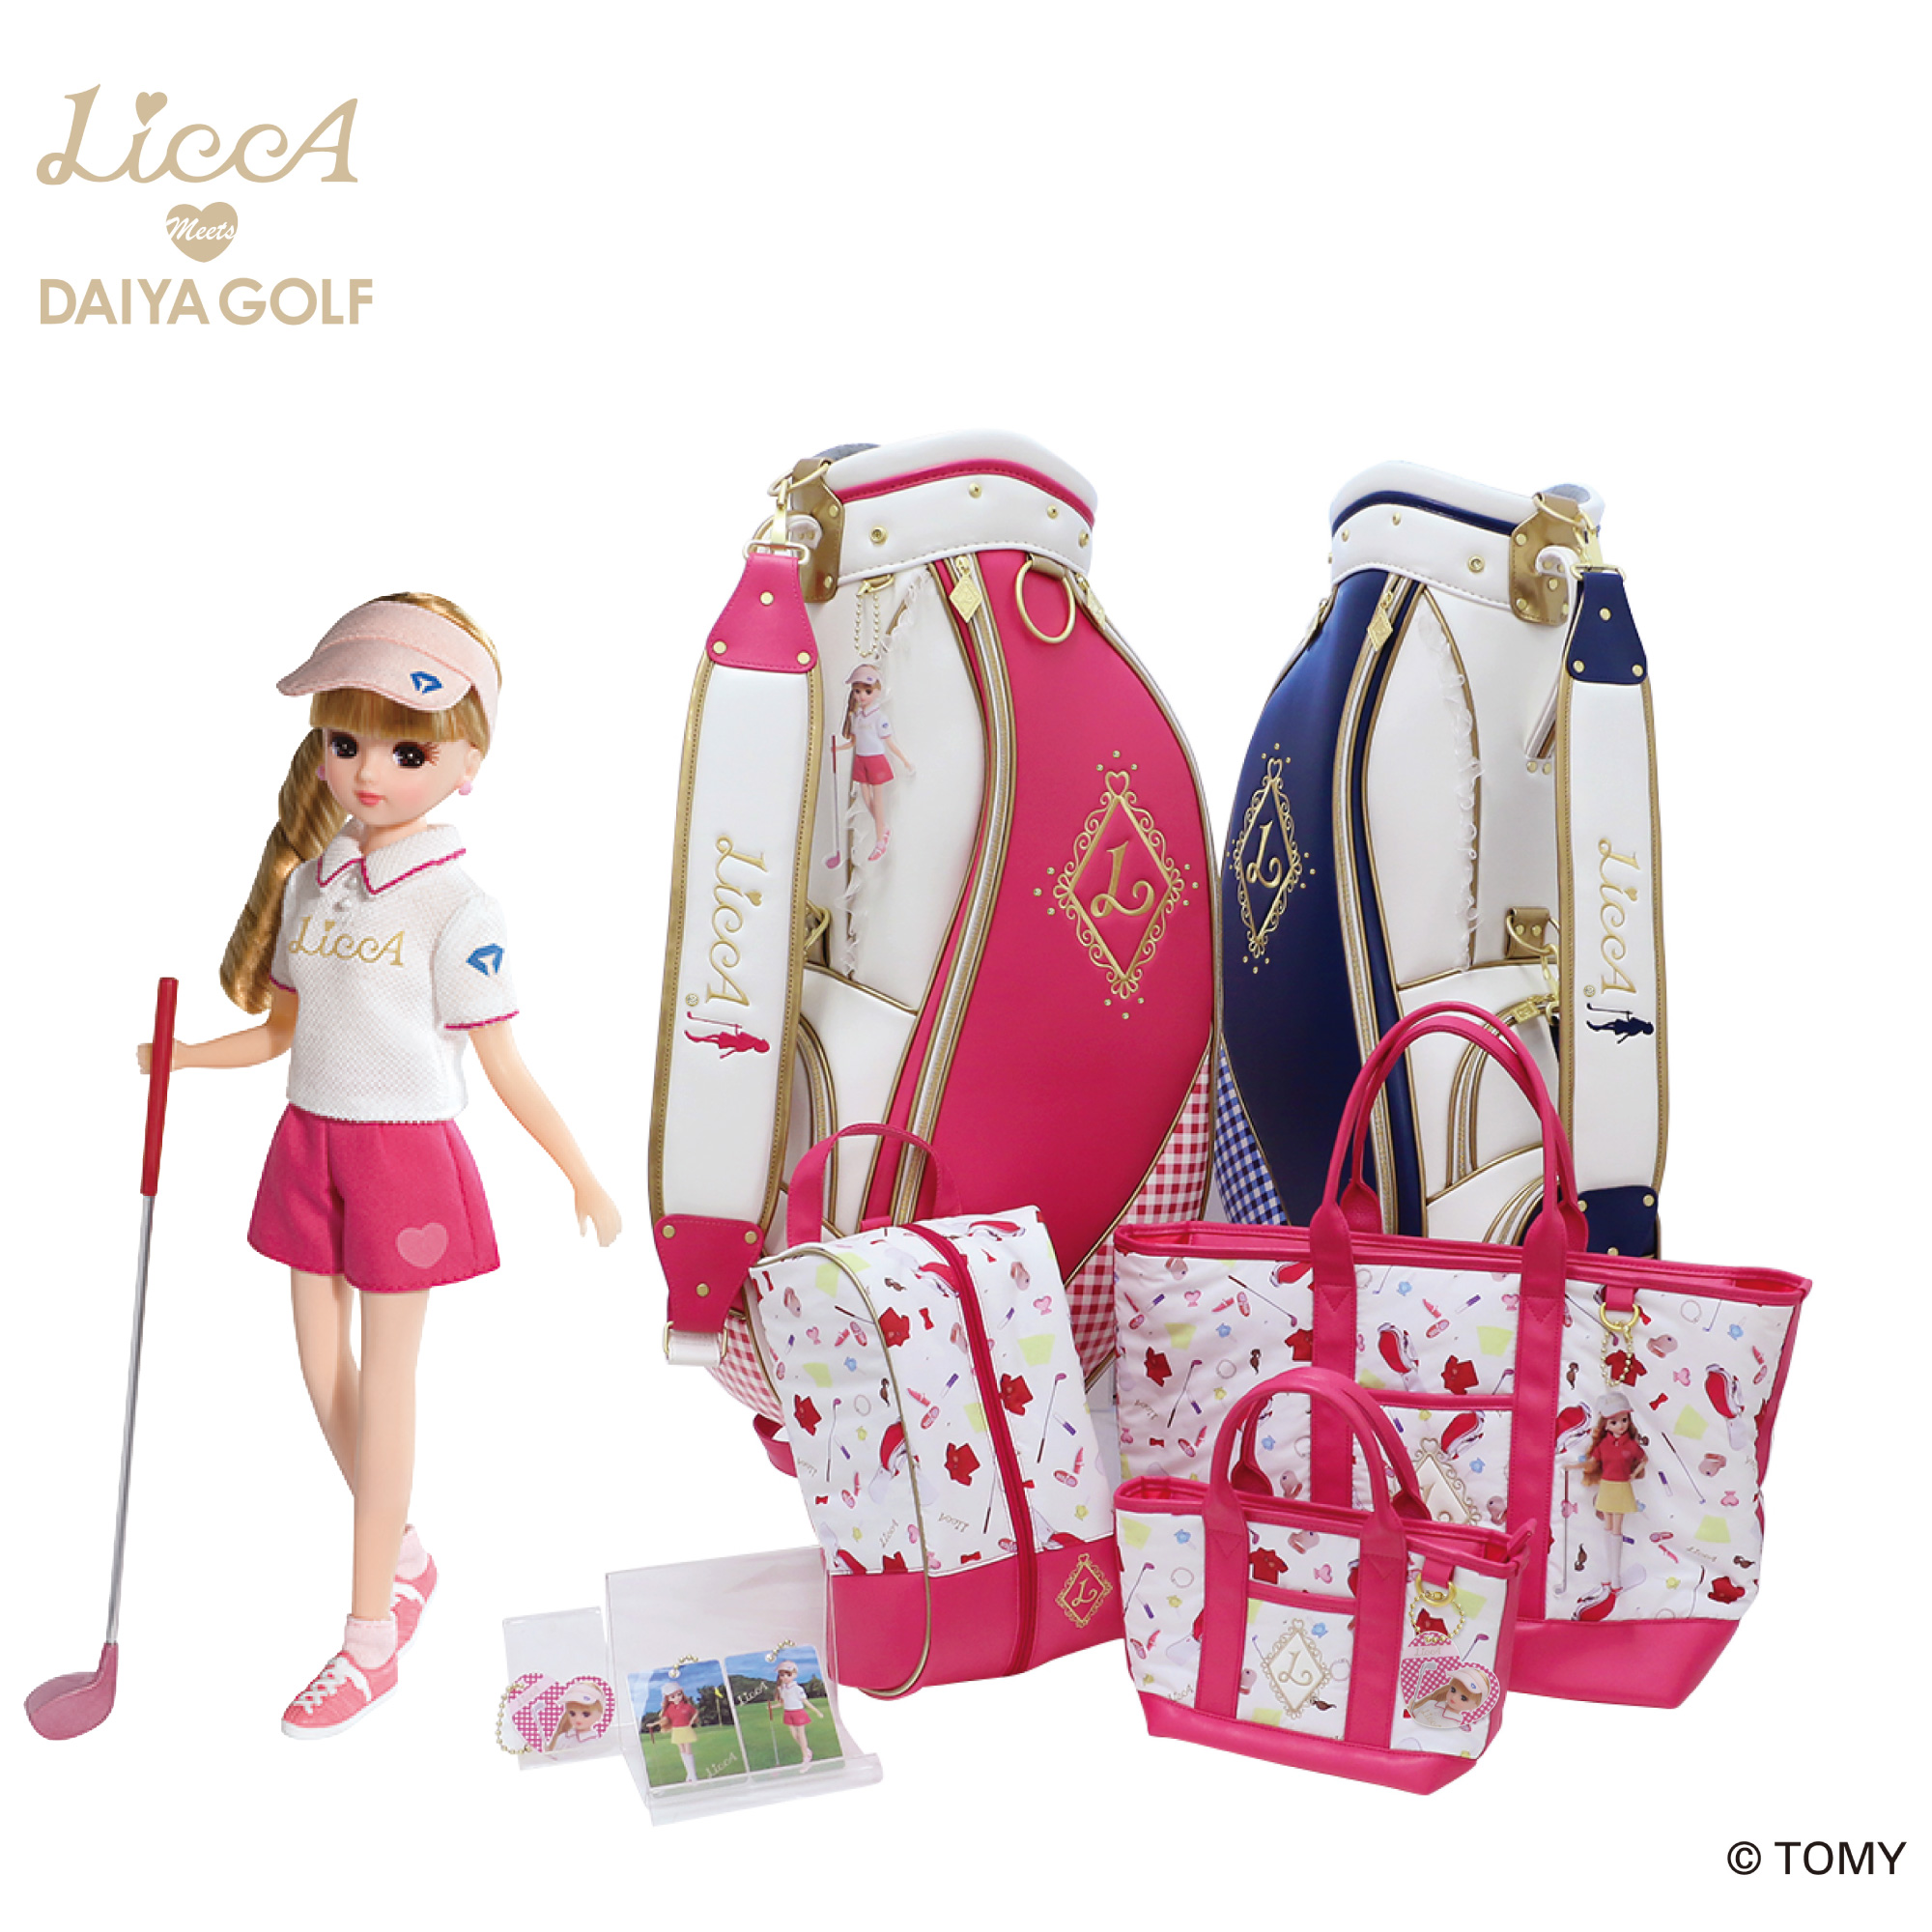 「LiccA」とダイヤゴルフが女性ゴルファーに向けたコラボレーション業界初！「LiccA」ブランドのゴルフグッズ全13商品を発売｜ダイヤの